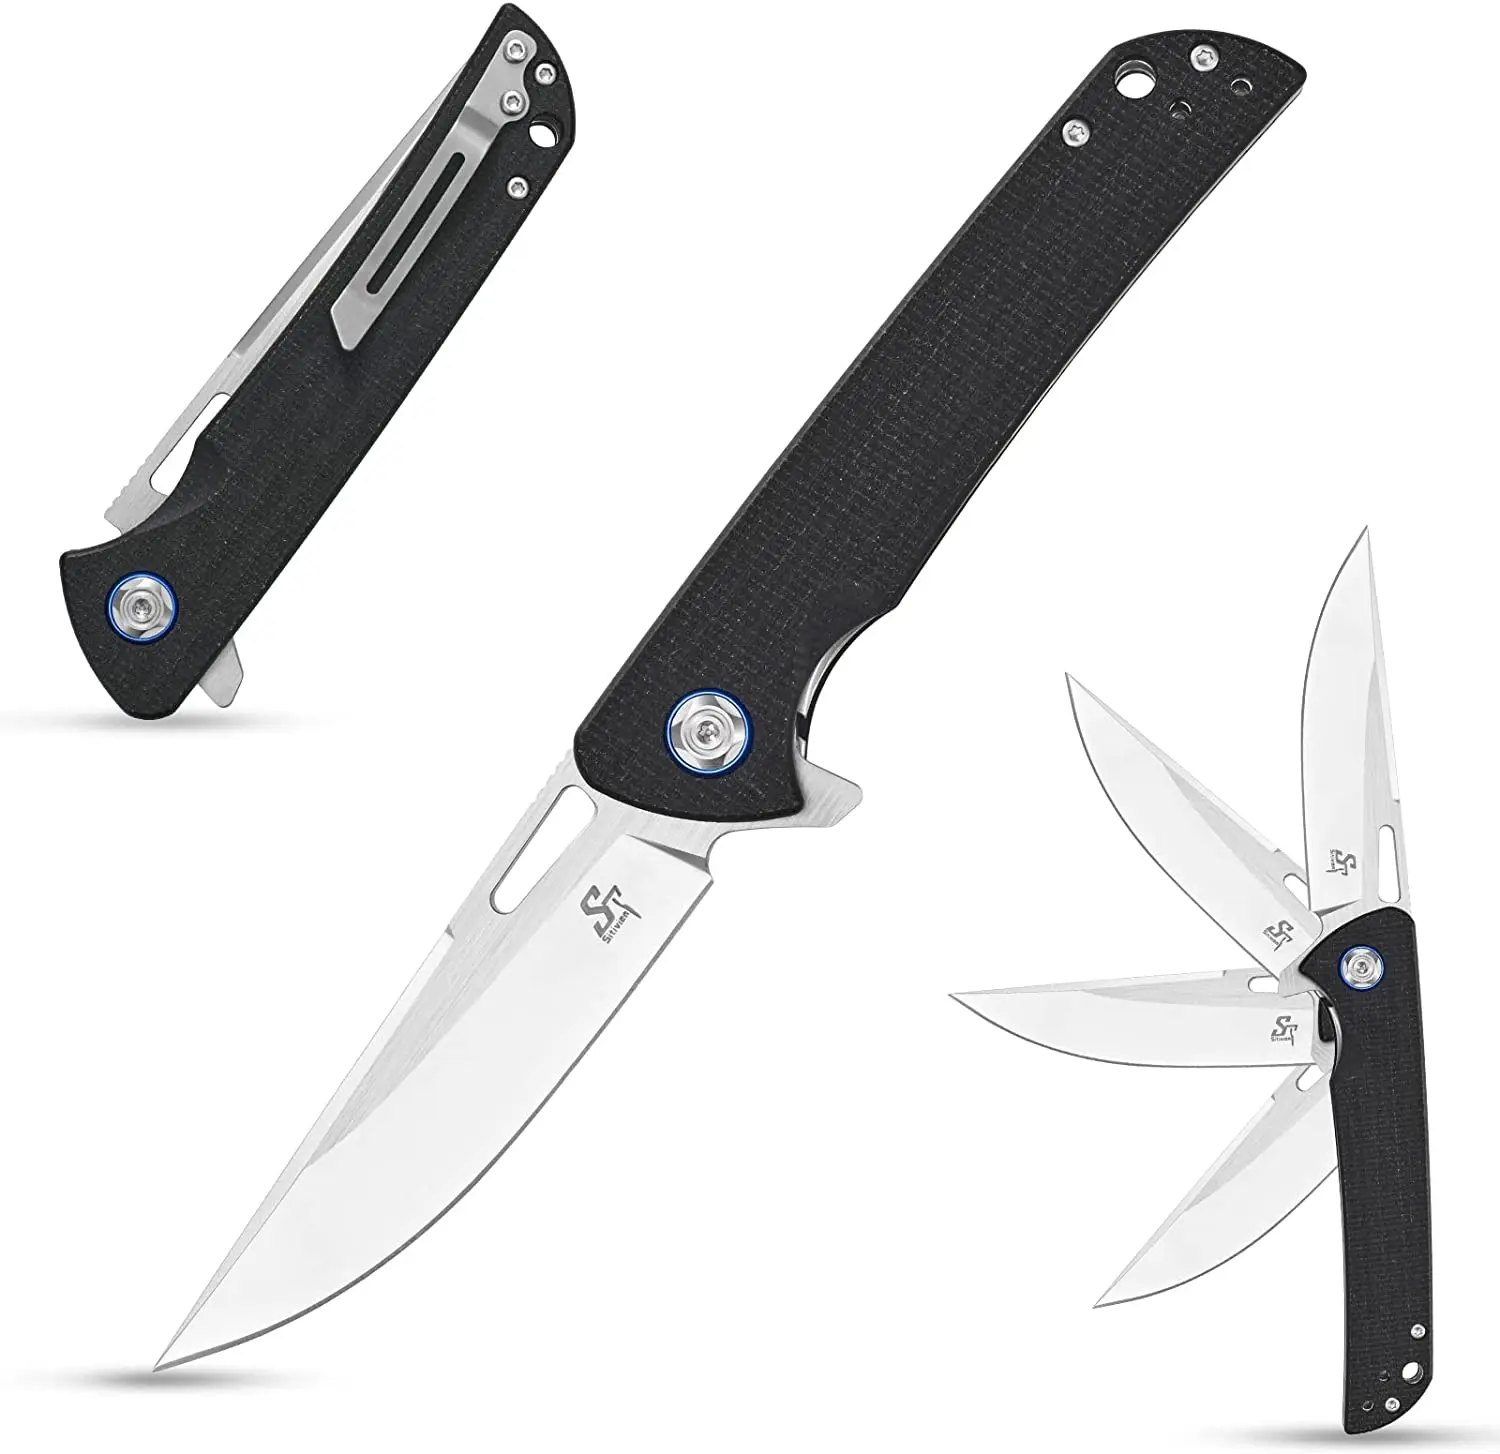 Sitivien ST148 Folding Knife D2 Blade Micarta Handle Pocket Knife EDC Tool Knife for Working Camping